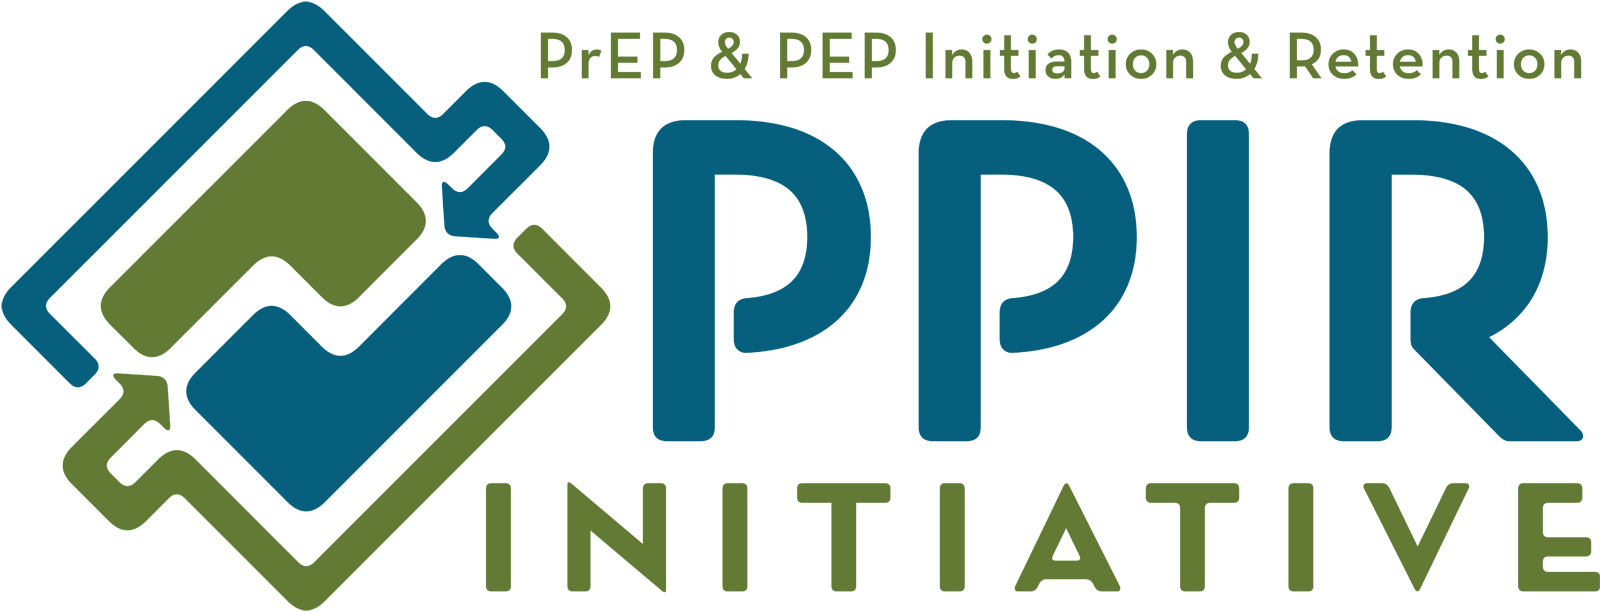 ReEP & PEP Inititation & Retention logo